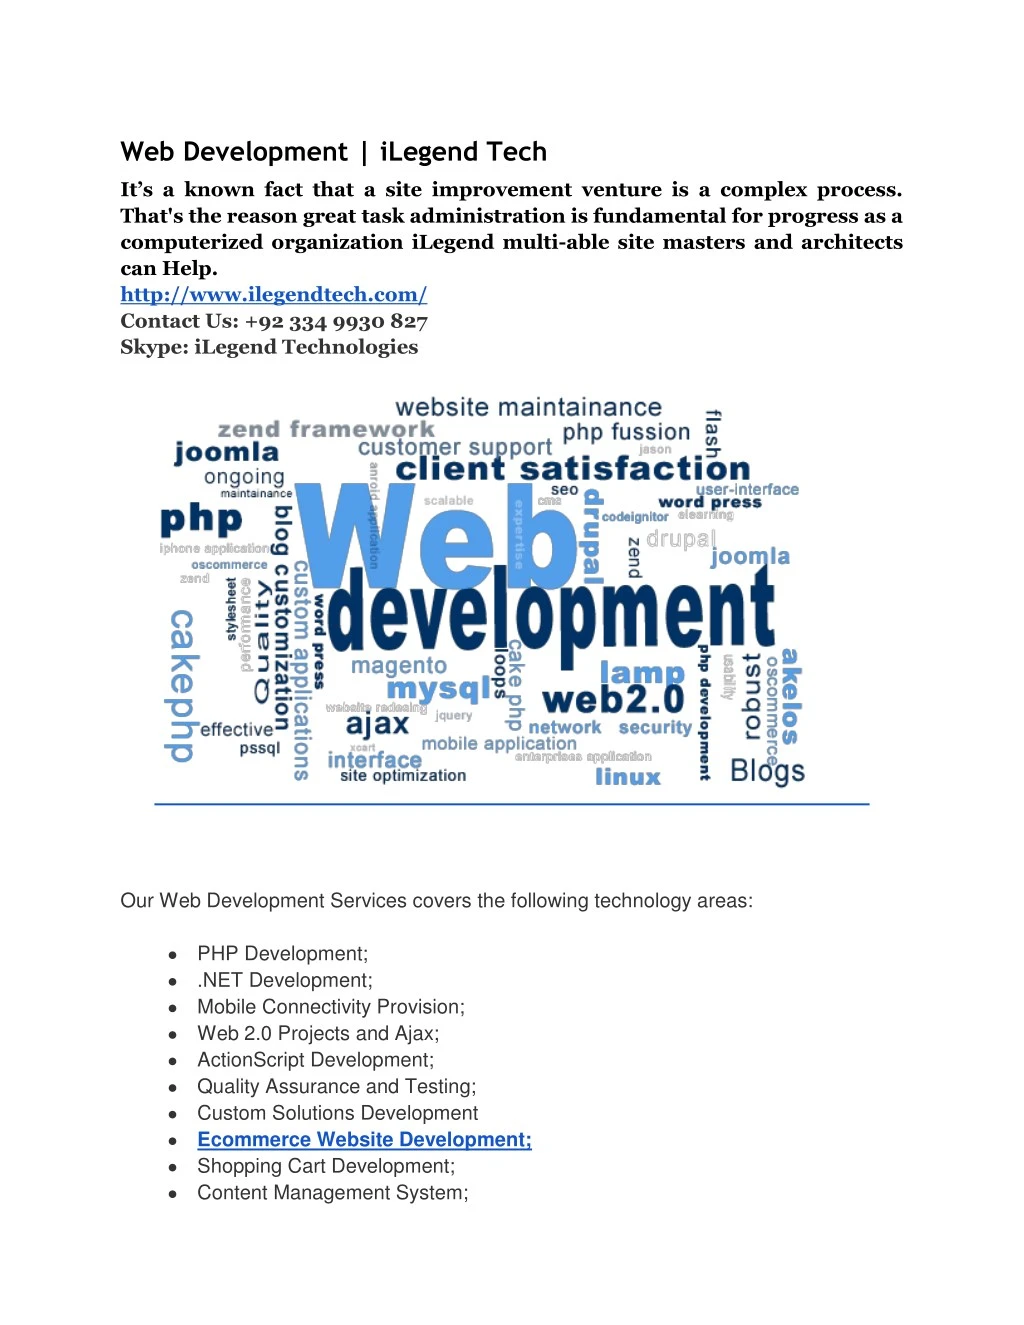 web development ilegend tech